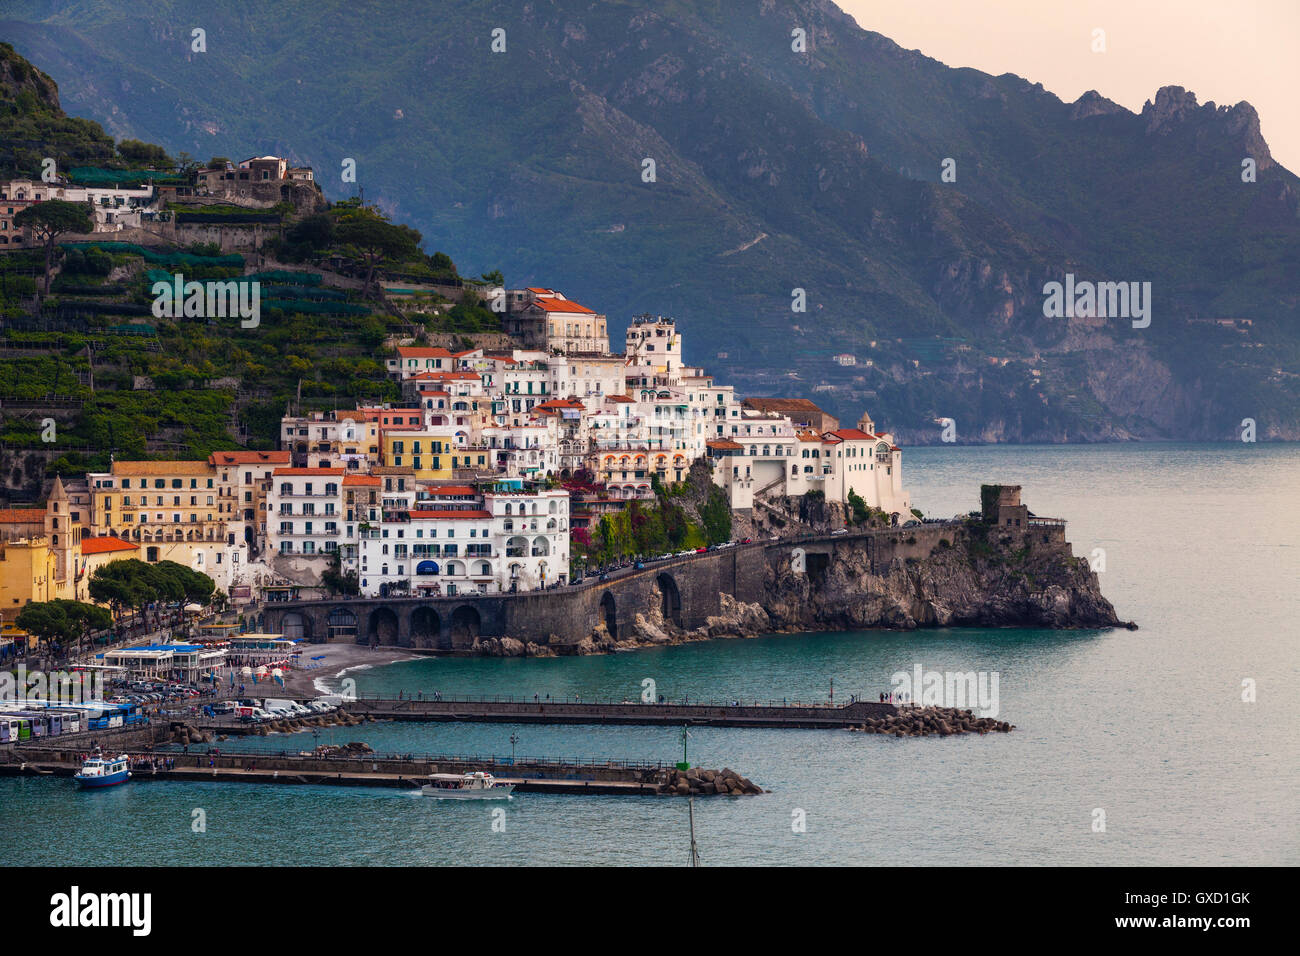 Building on cliffside and marina, Amalfi, Amalfi Coast, Italy Stock Photo